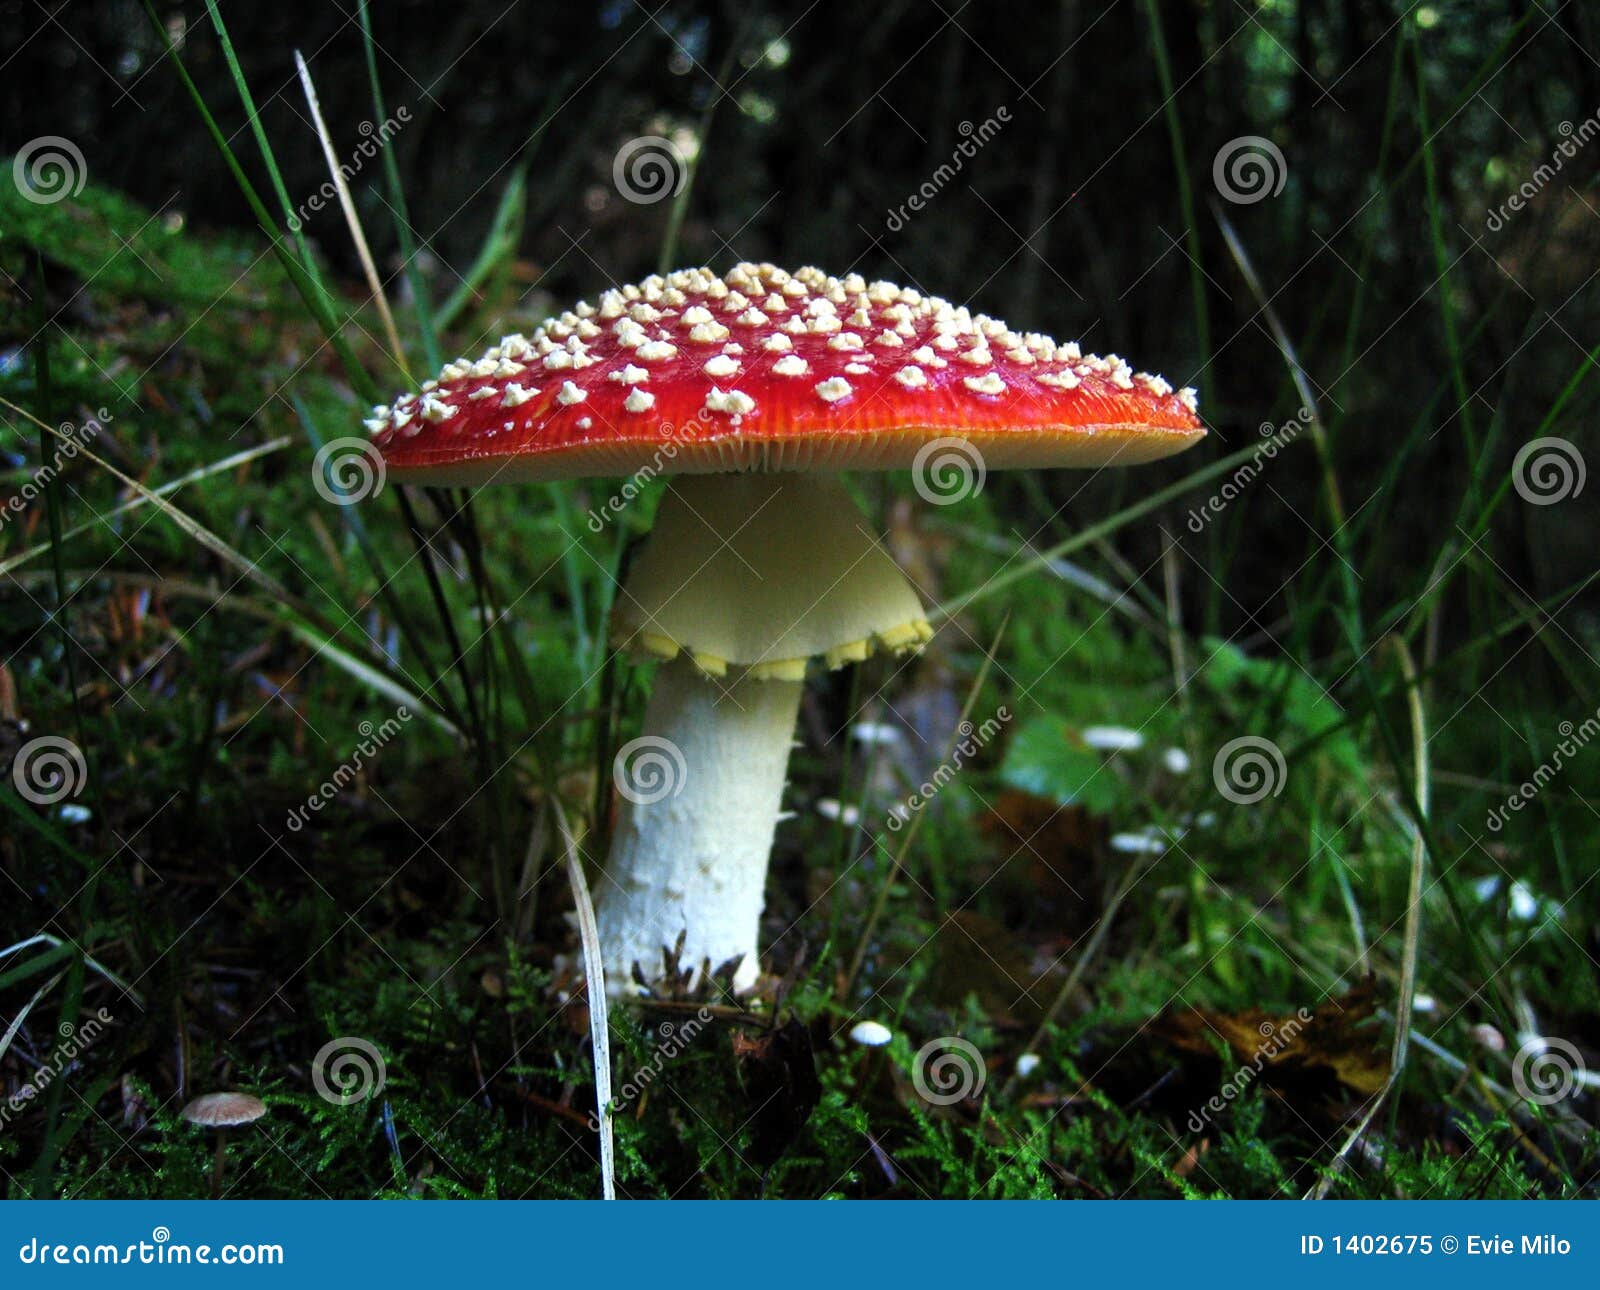 autumnal mushrooms